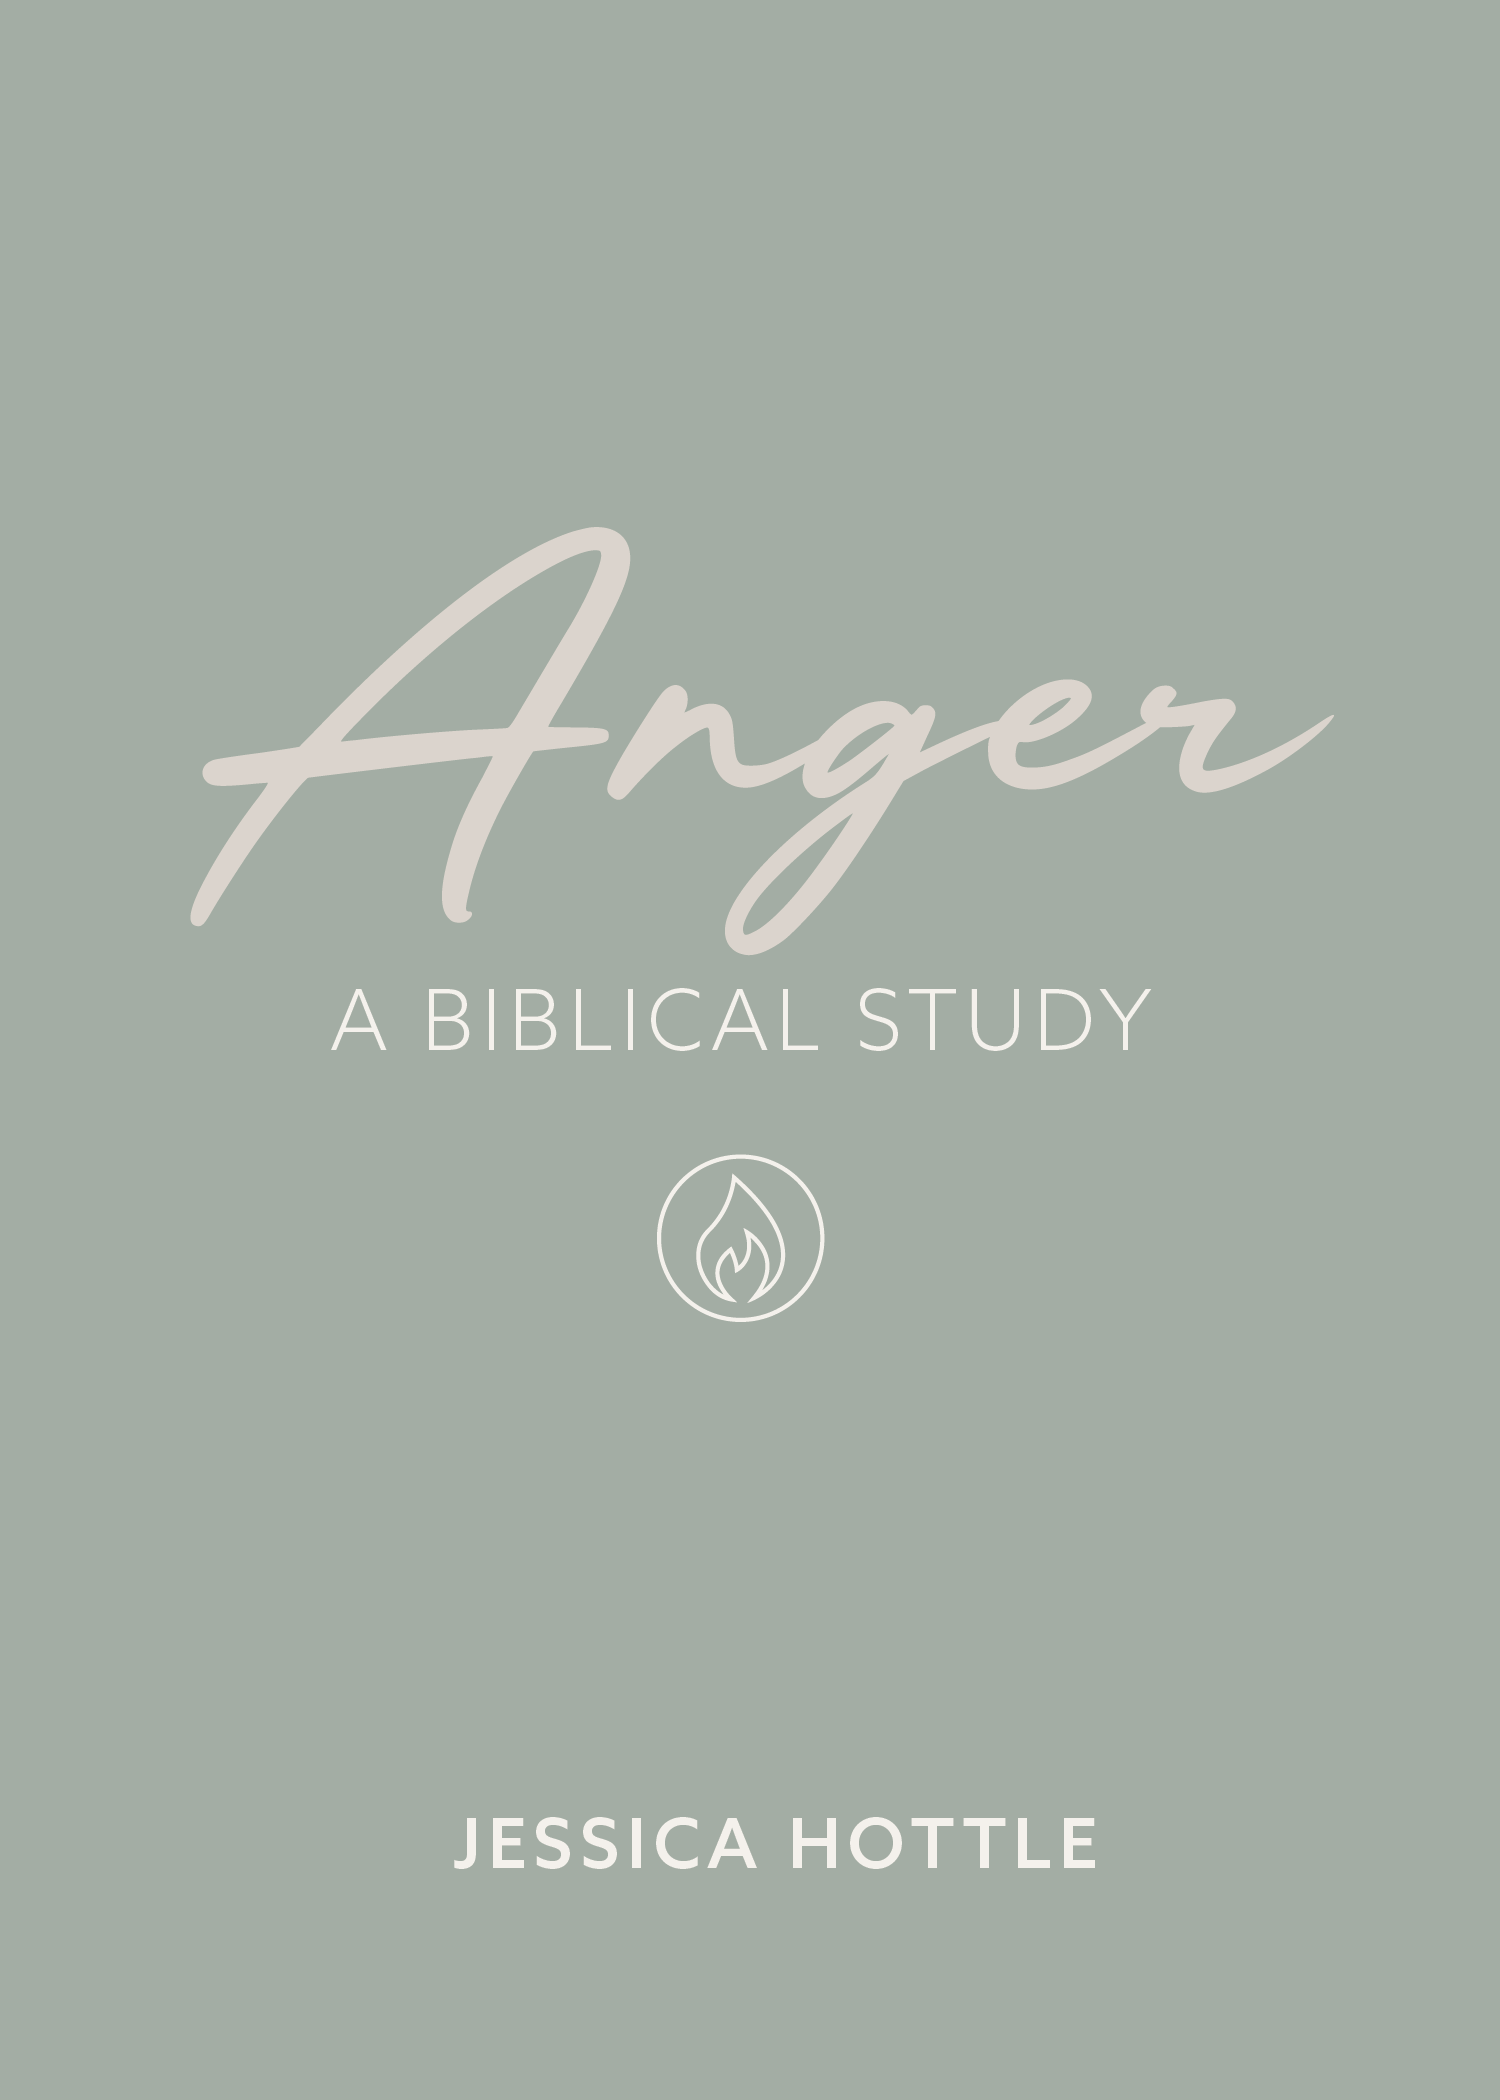 A biblical study on anger